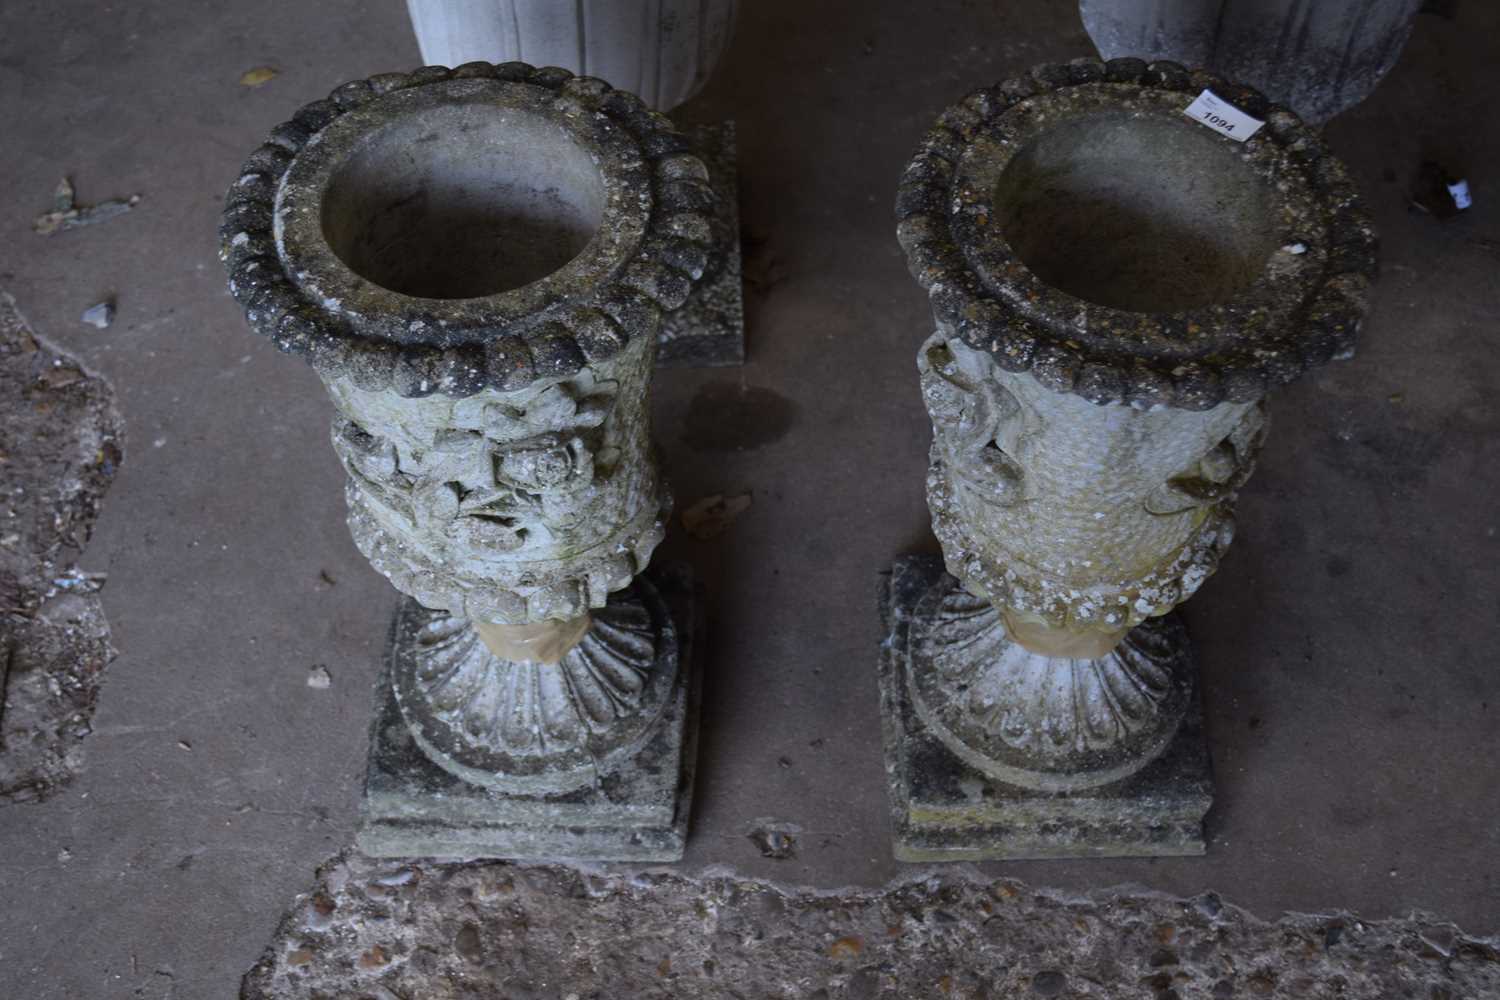 Two composite garden urns/planters